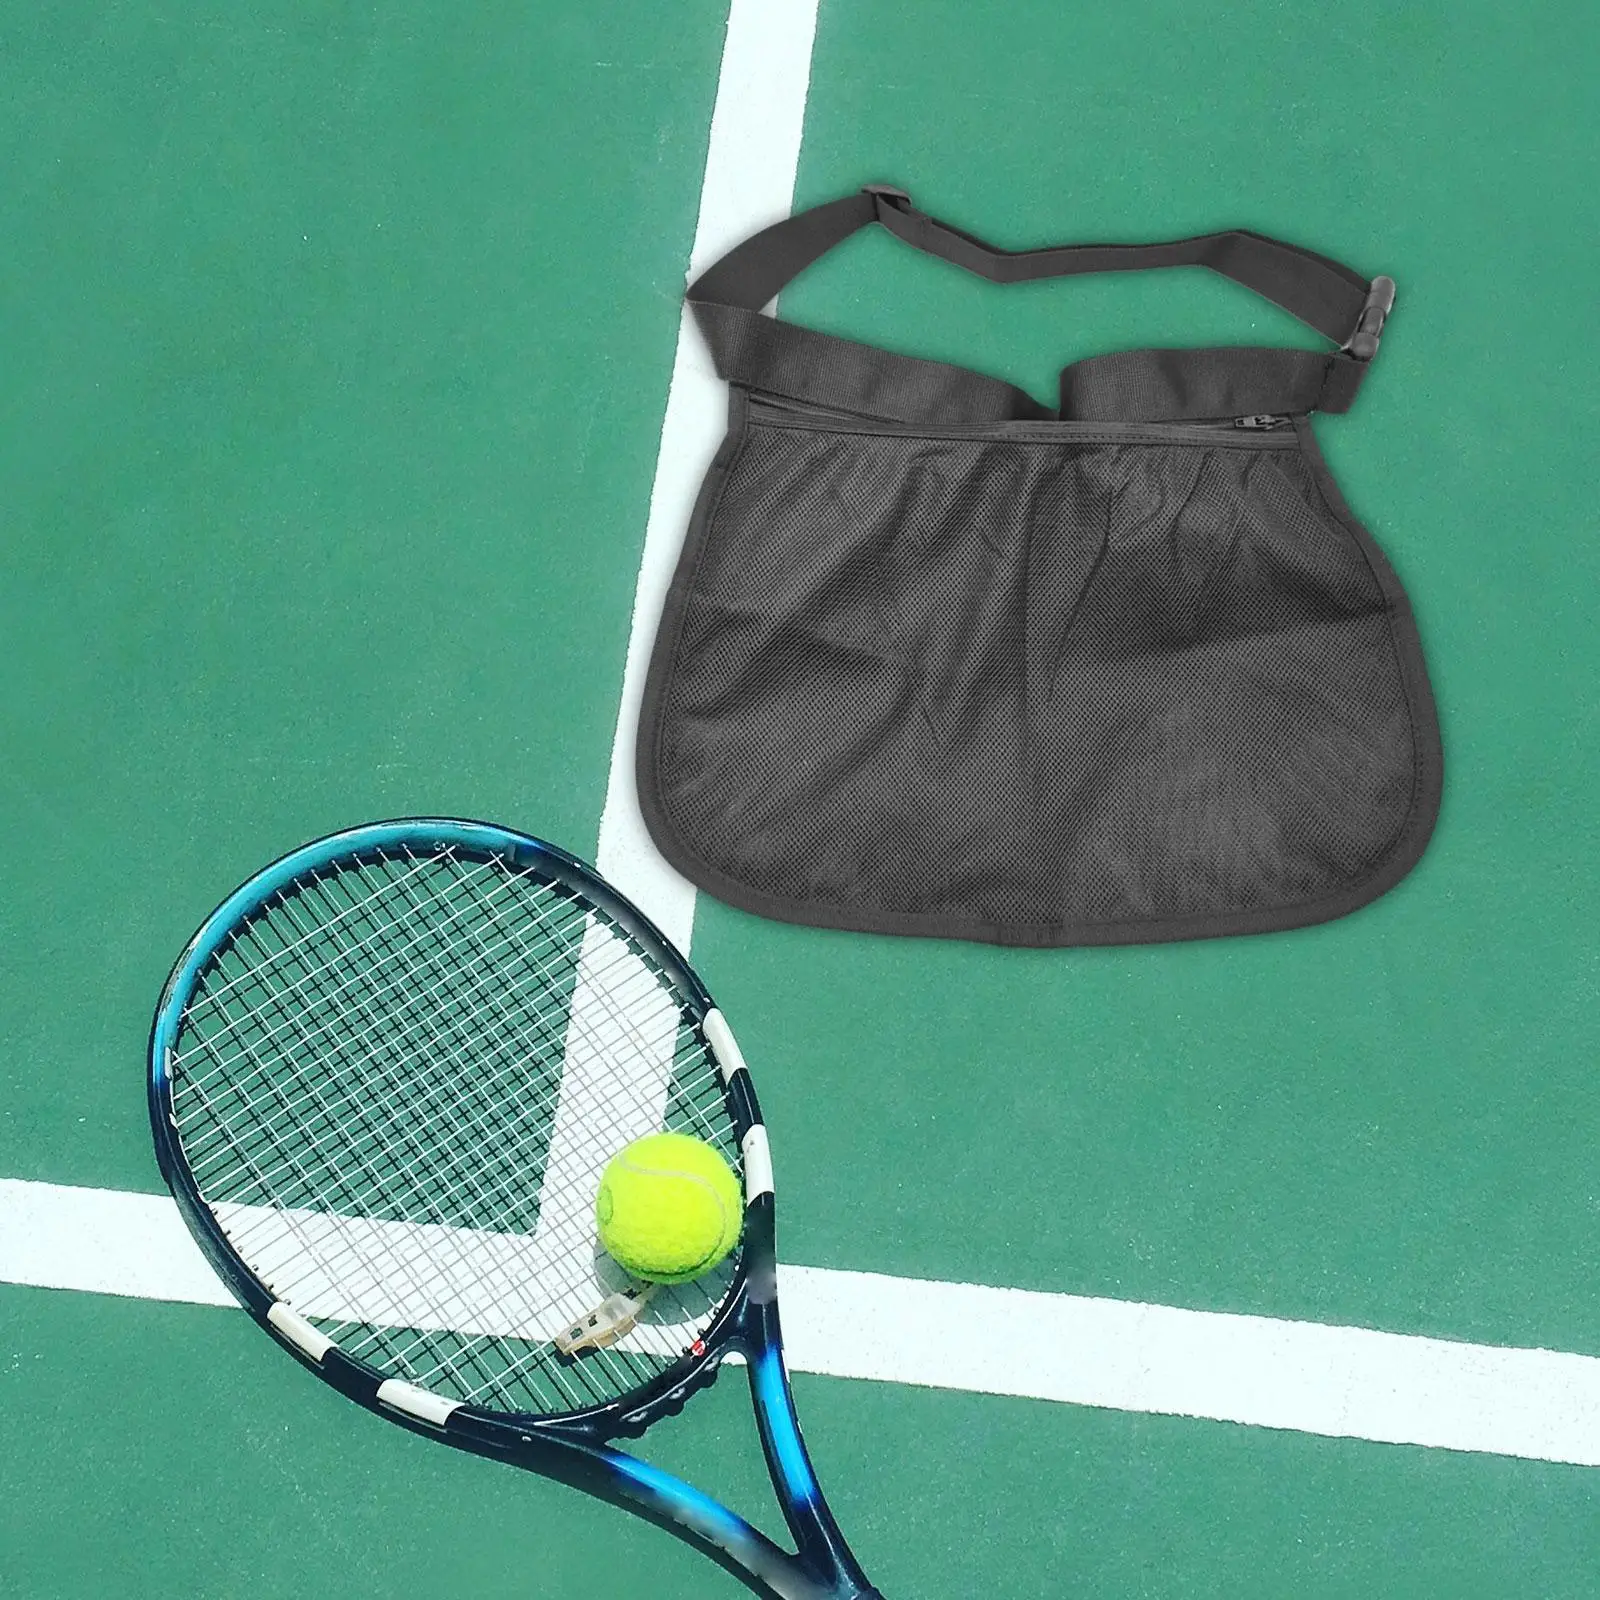 Tennis Ball Holder Tennis Ball Storage Bag for Storing Balls and Phones